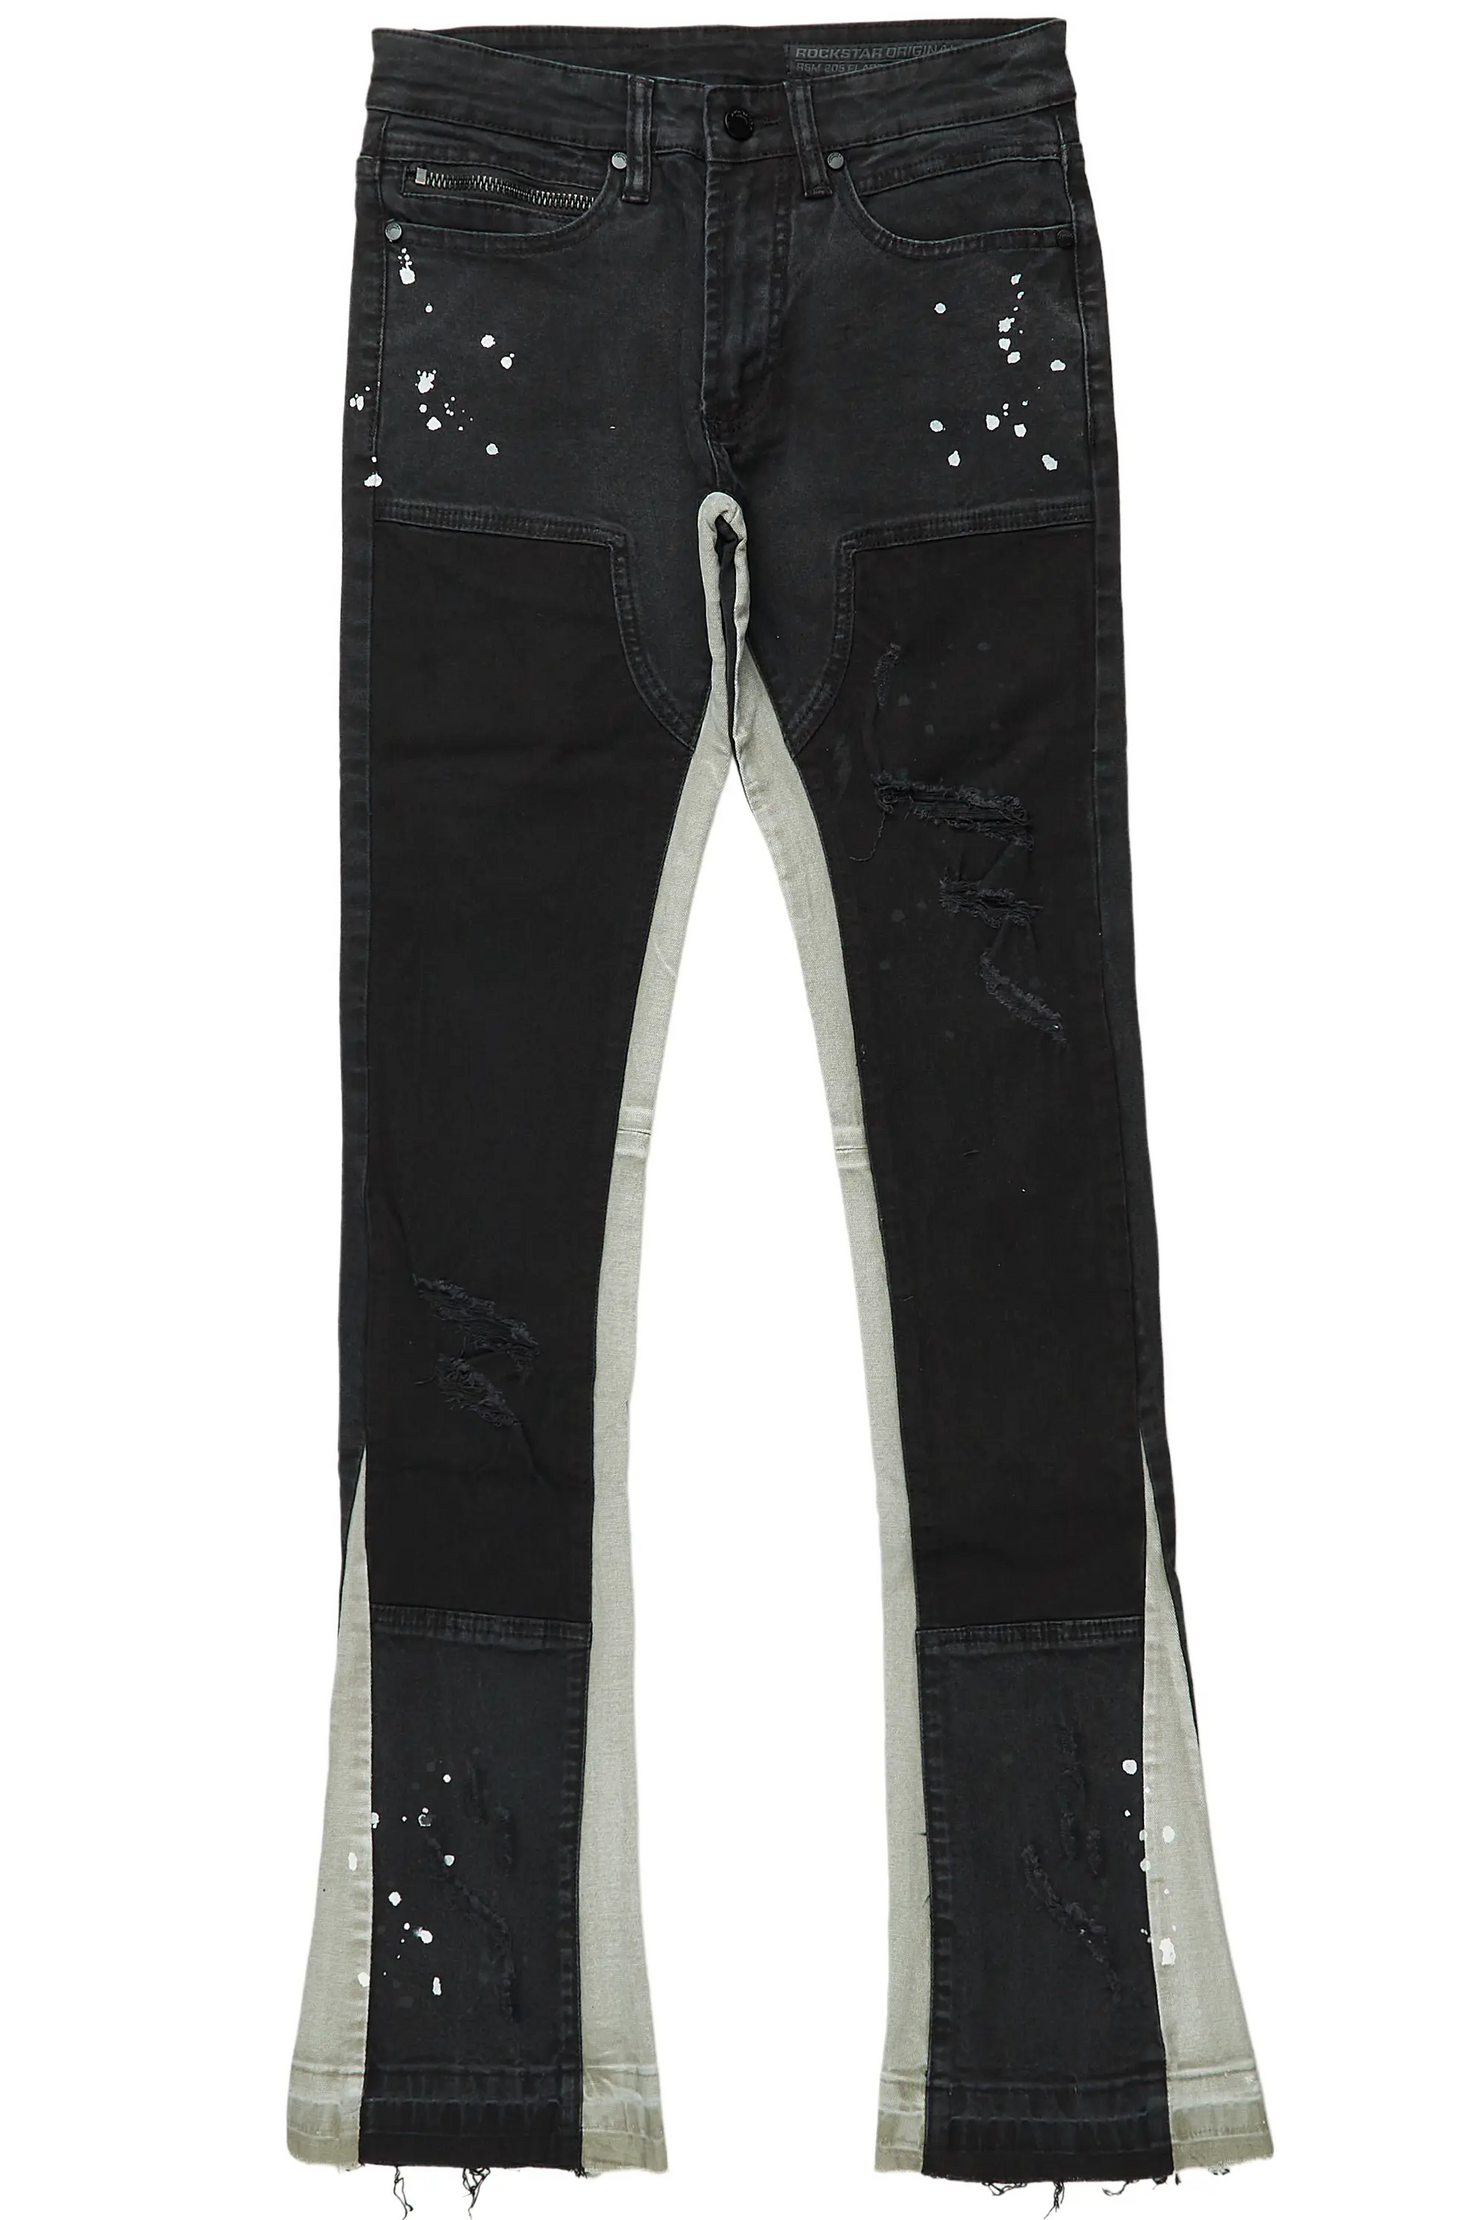 Quetzel Vintage Black Stacked Flare Jean